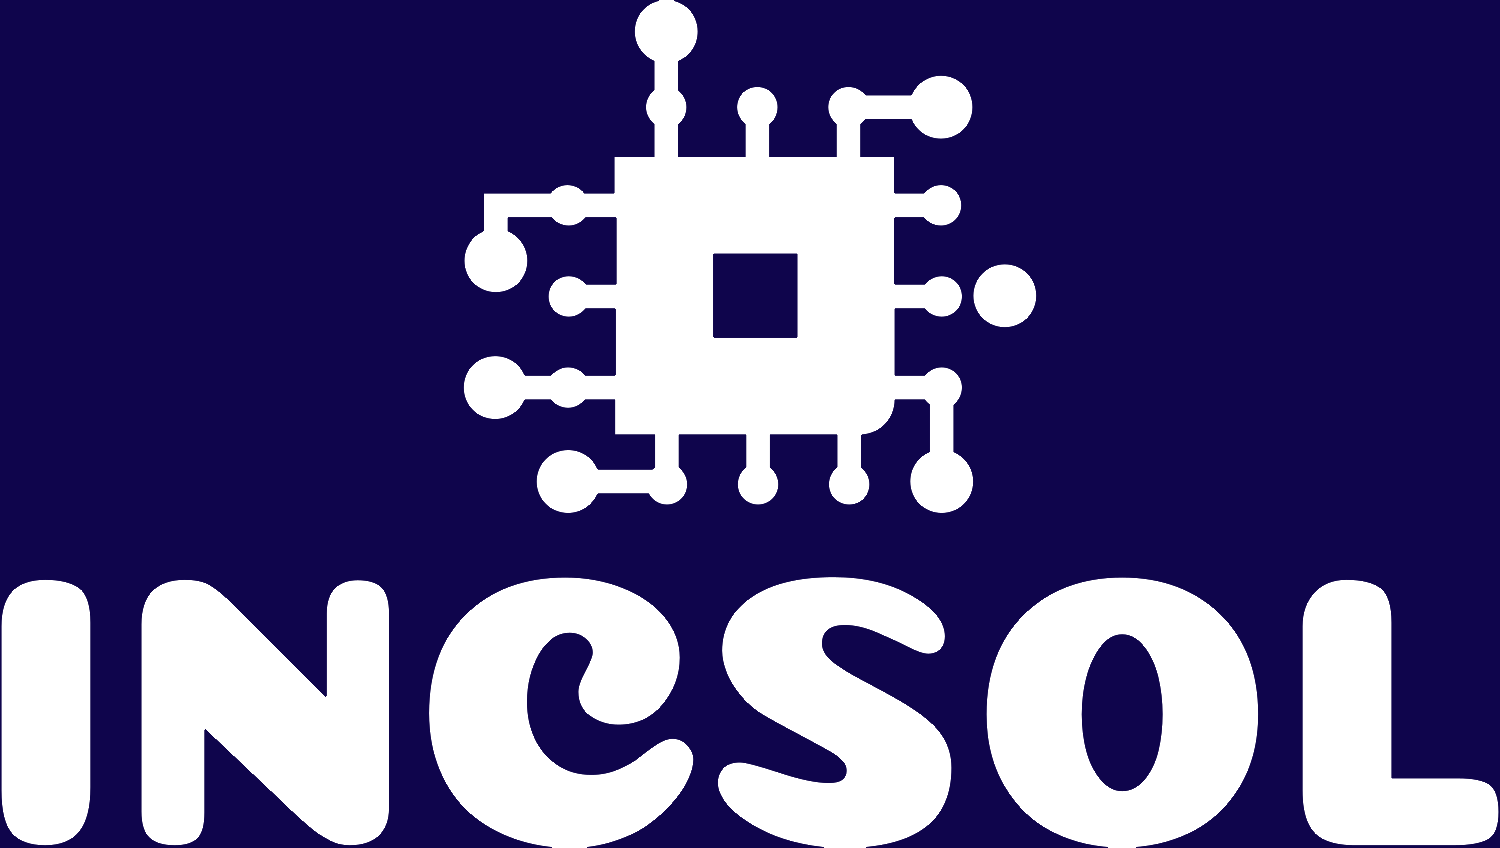 IncSol logo